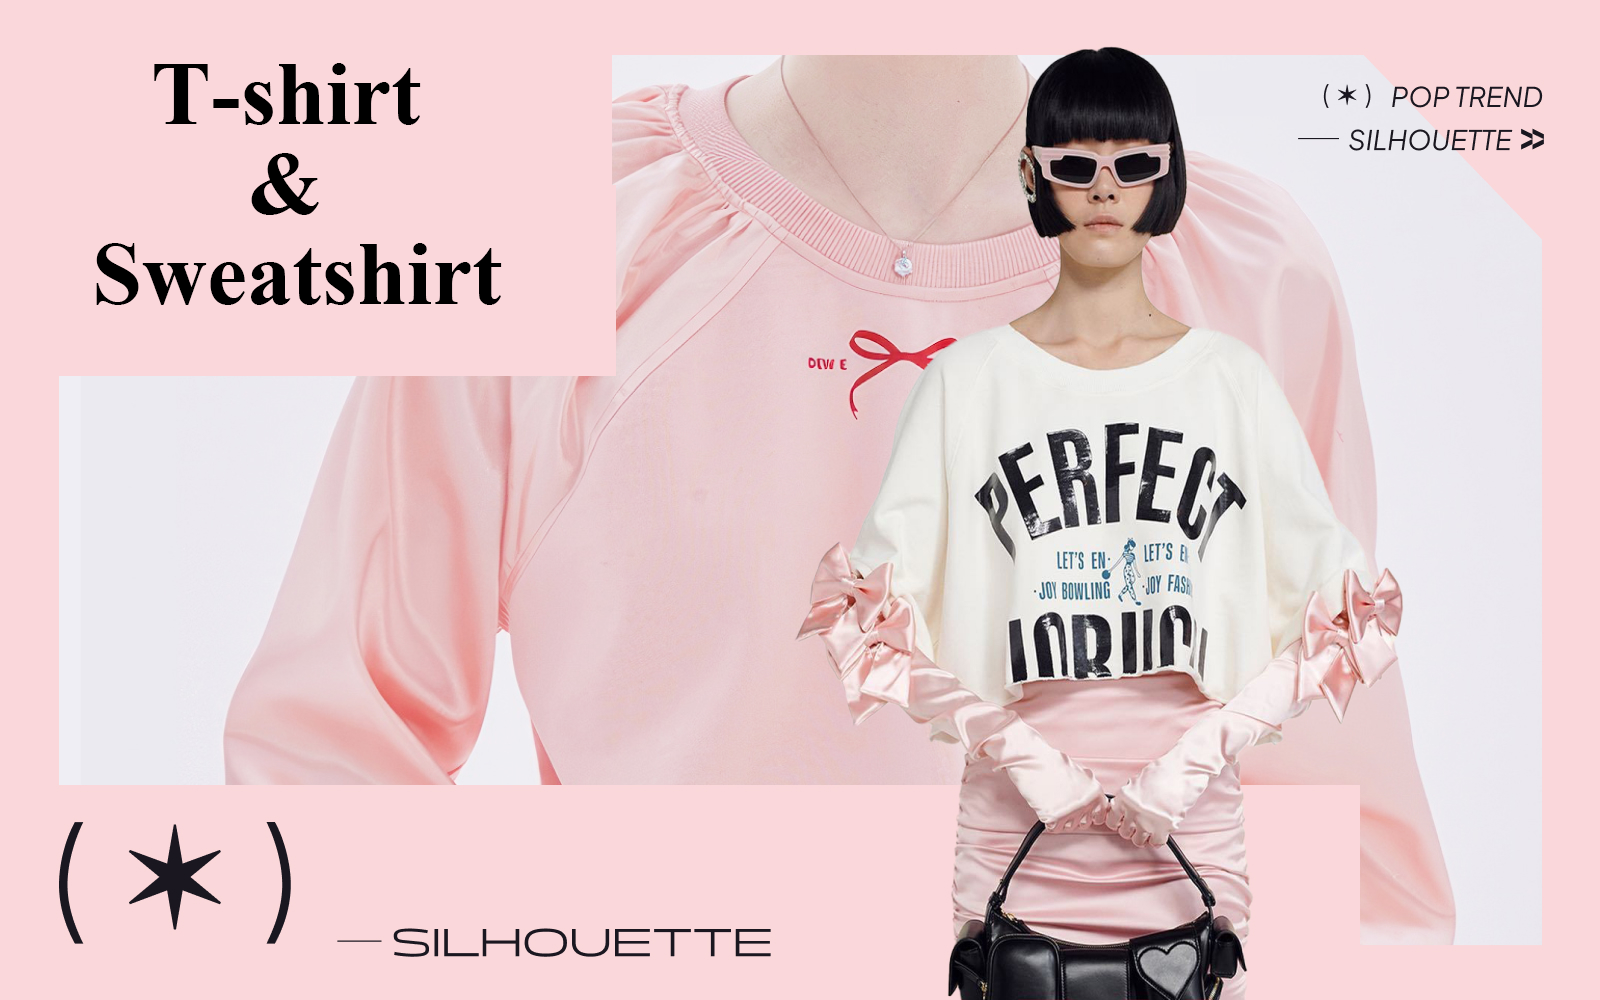 Blokette -- The Silhouette Trend for Women's T-shirt & Sweatshirt